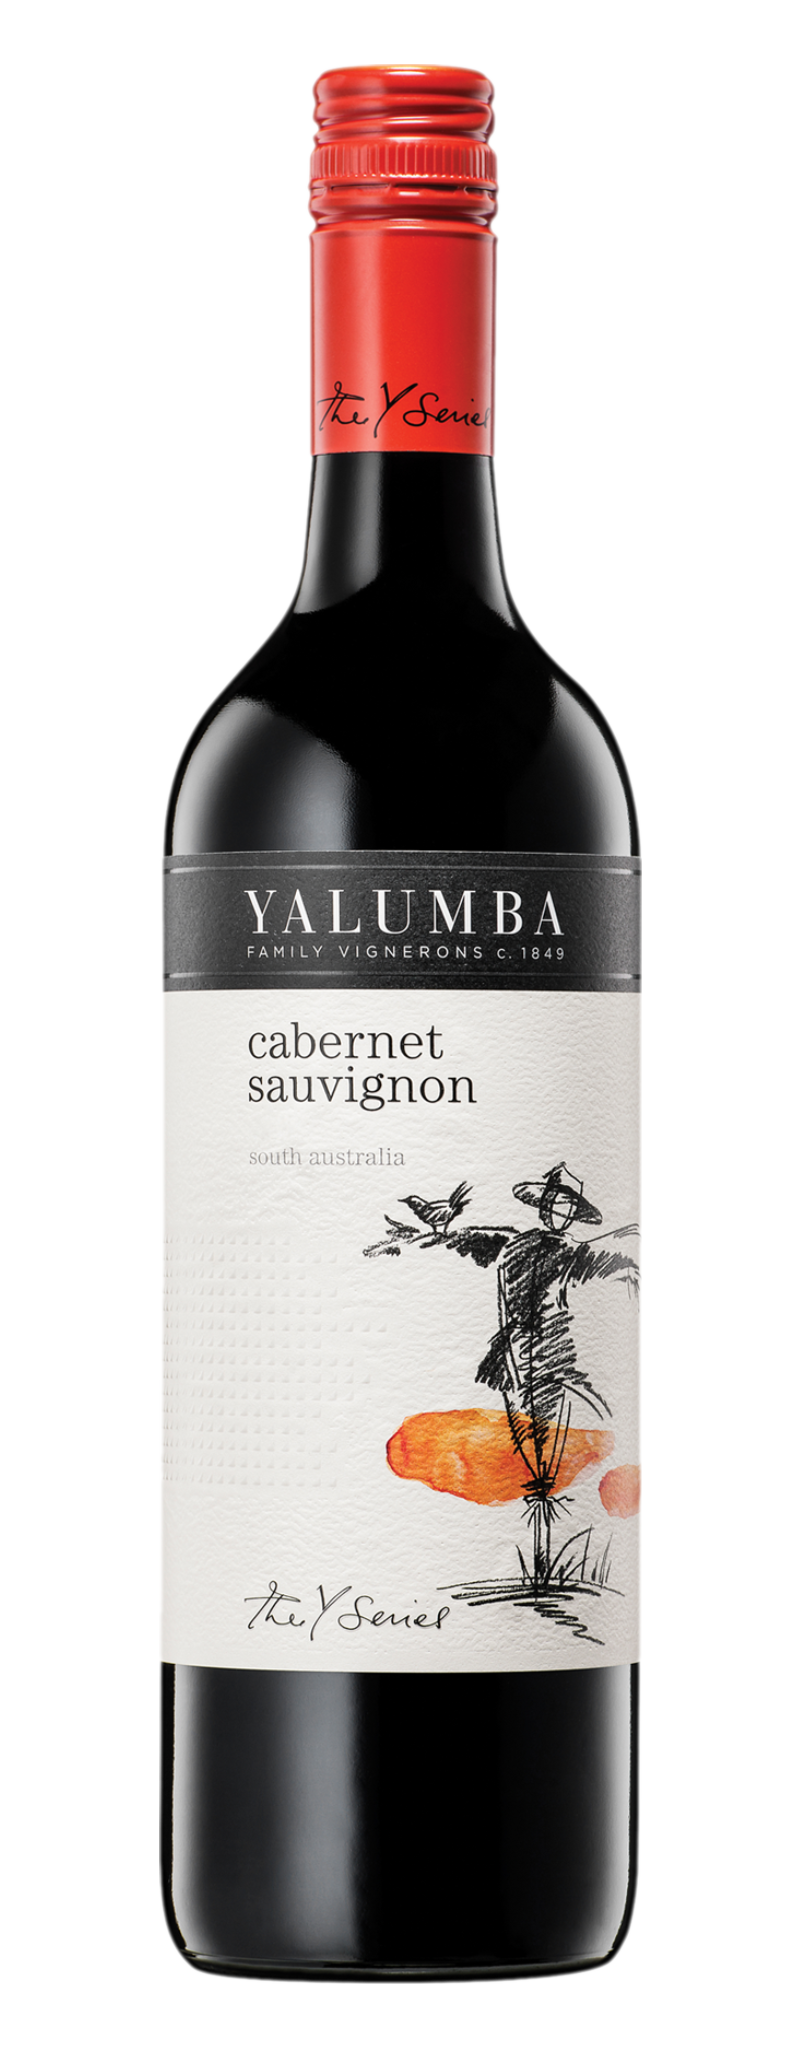 Yalumba "Y Series" Cabernet Sauvignon  - 750ml